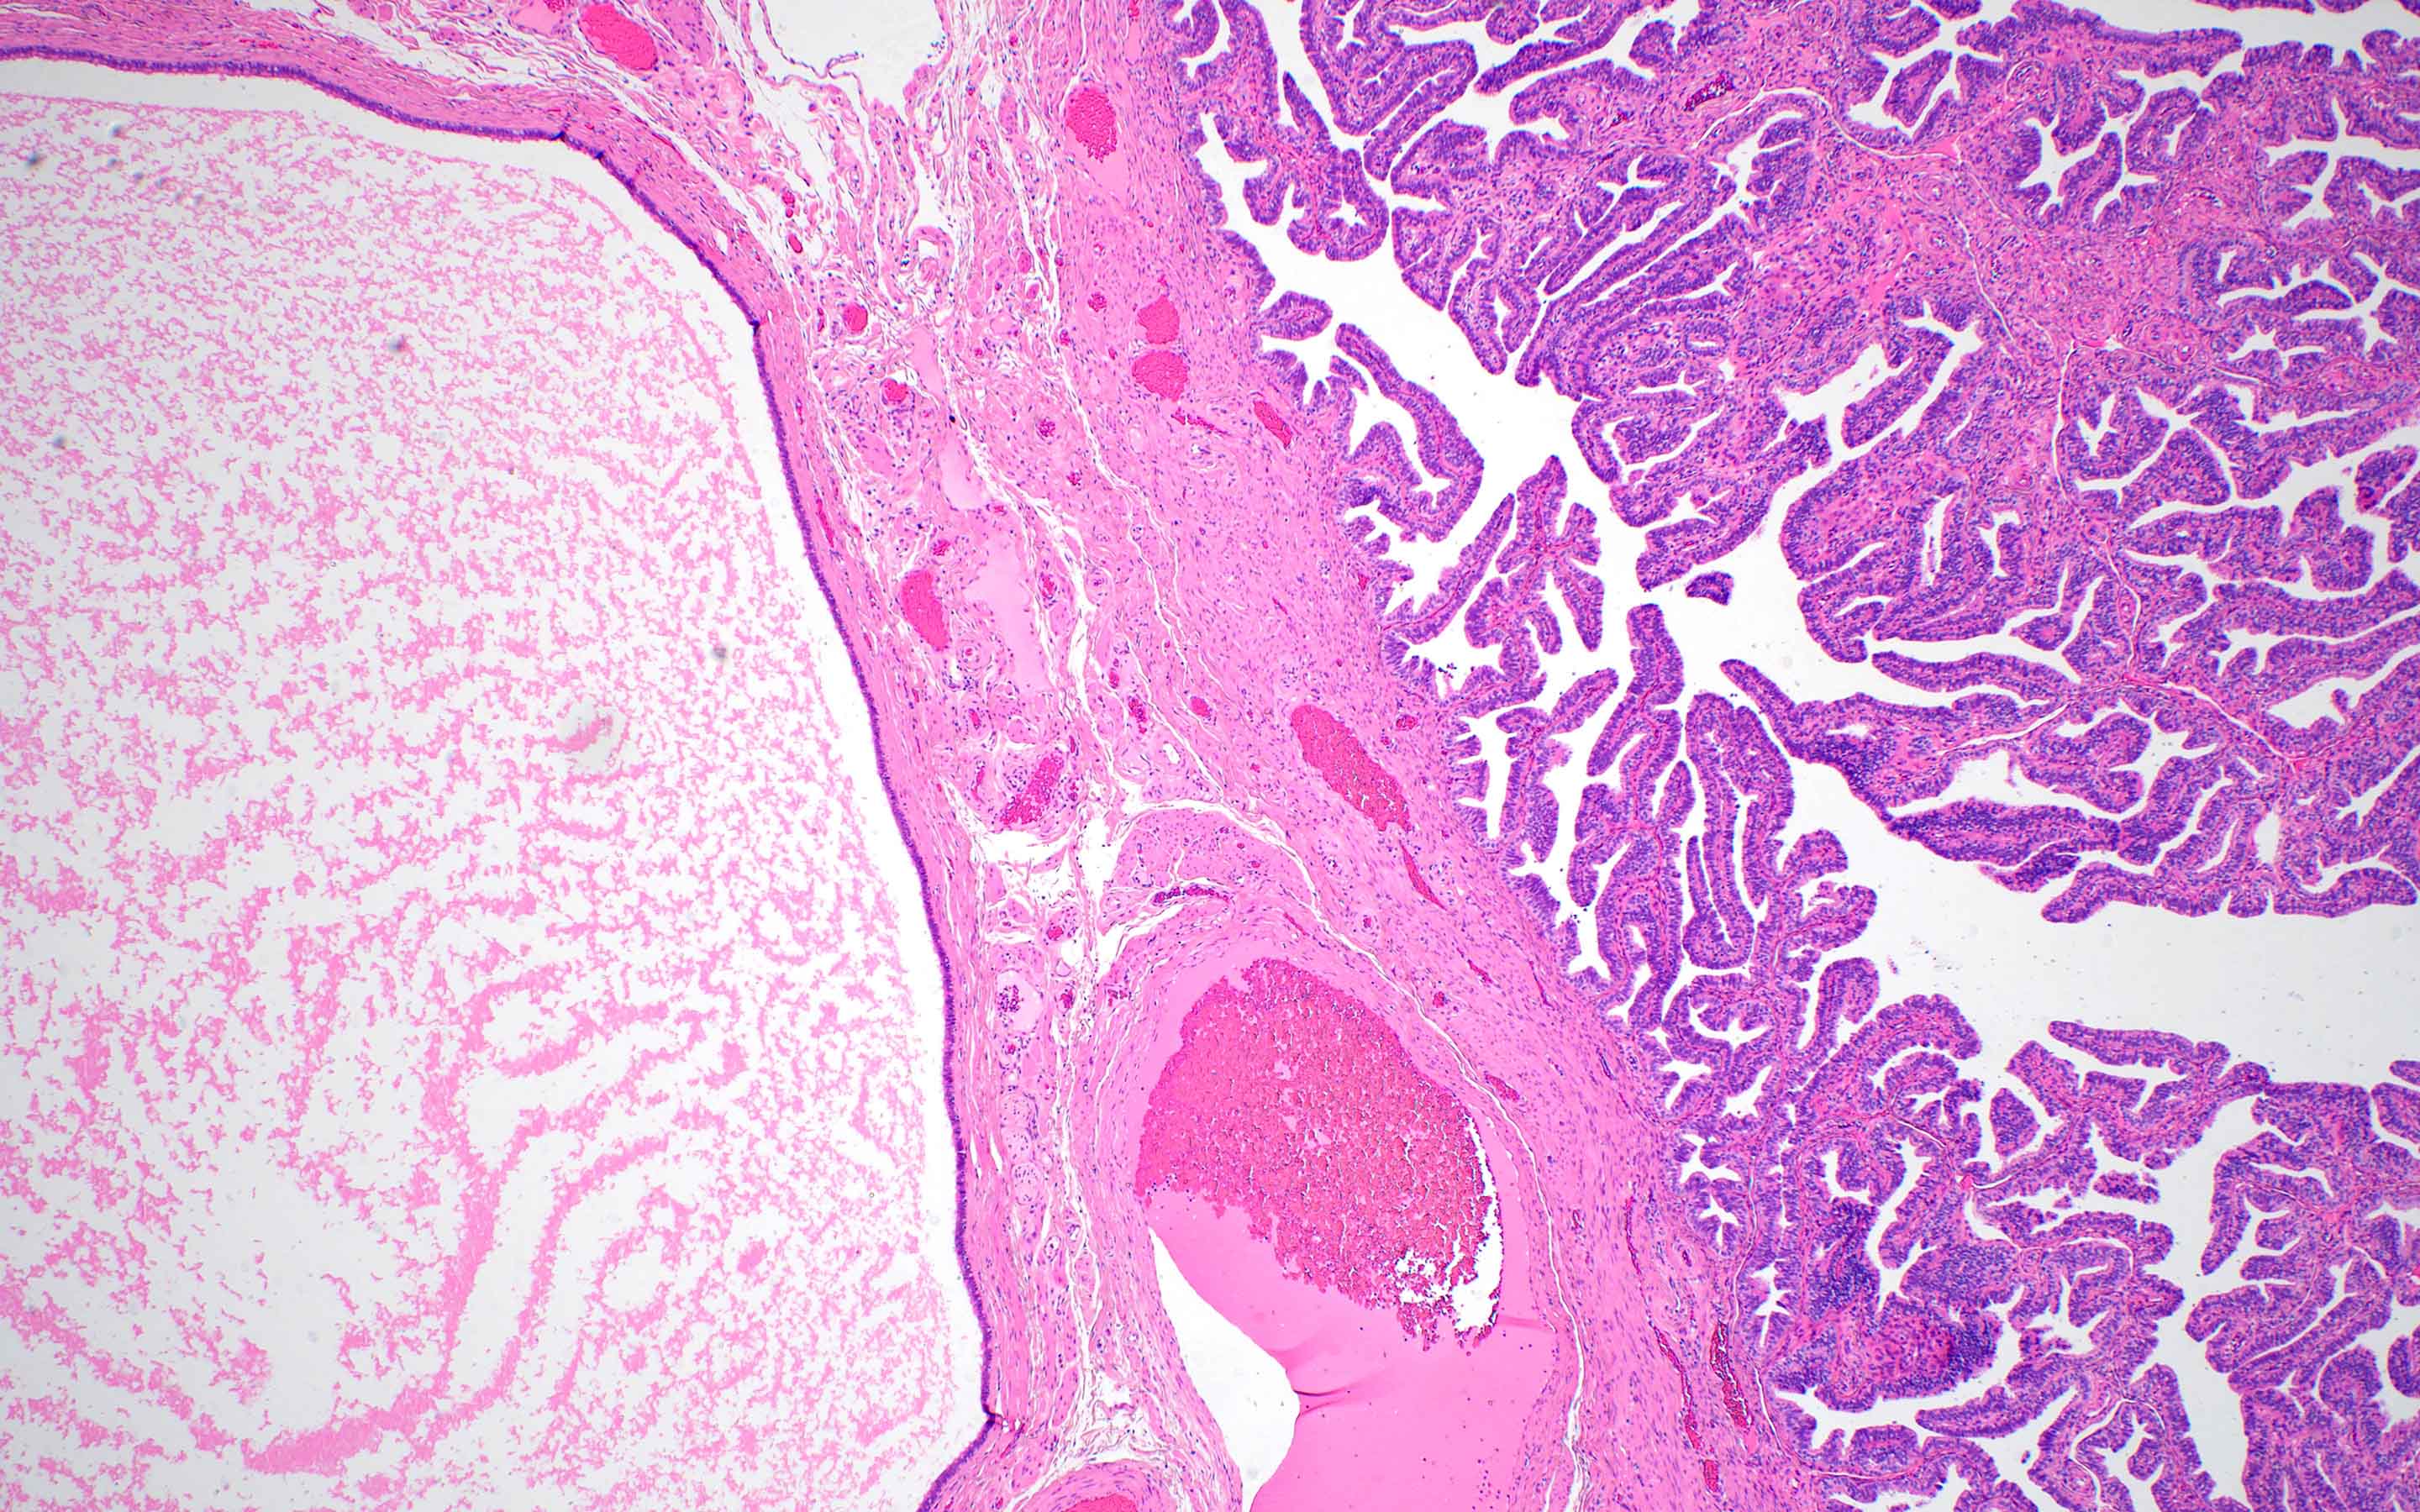 Simple cyst adjacent to fallopian tube